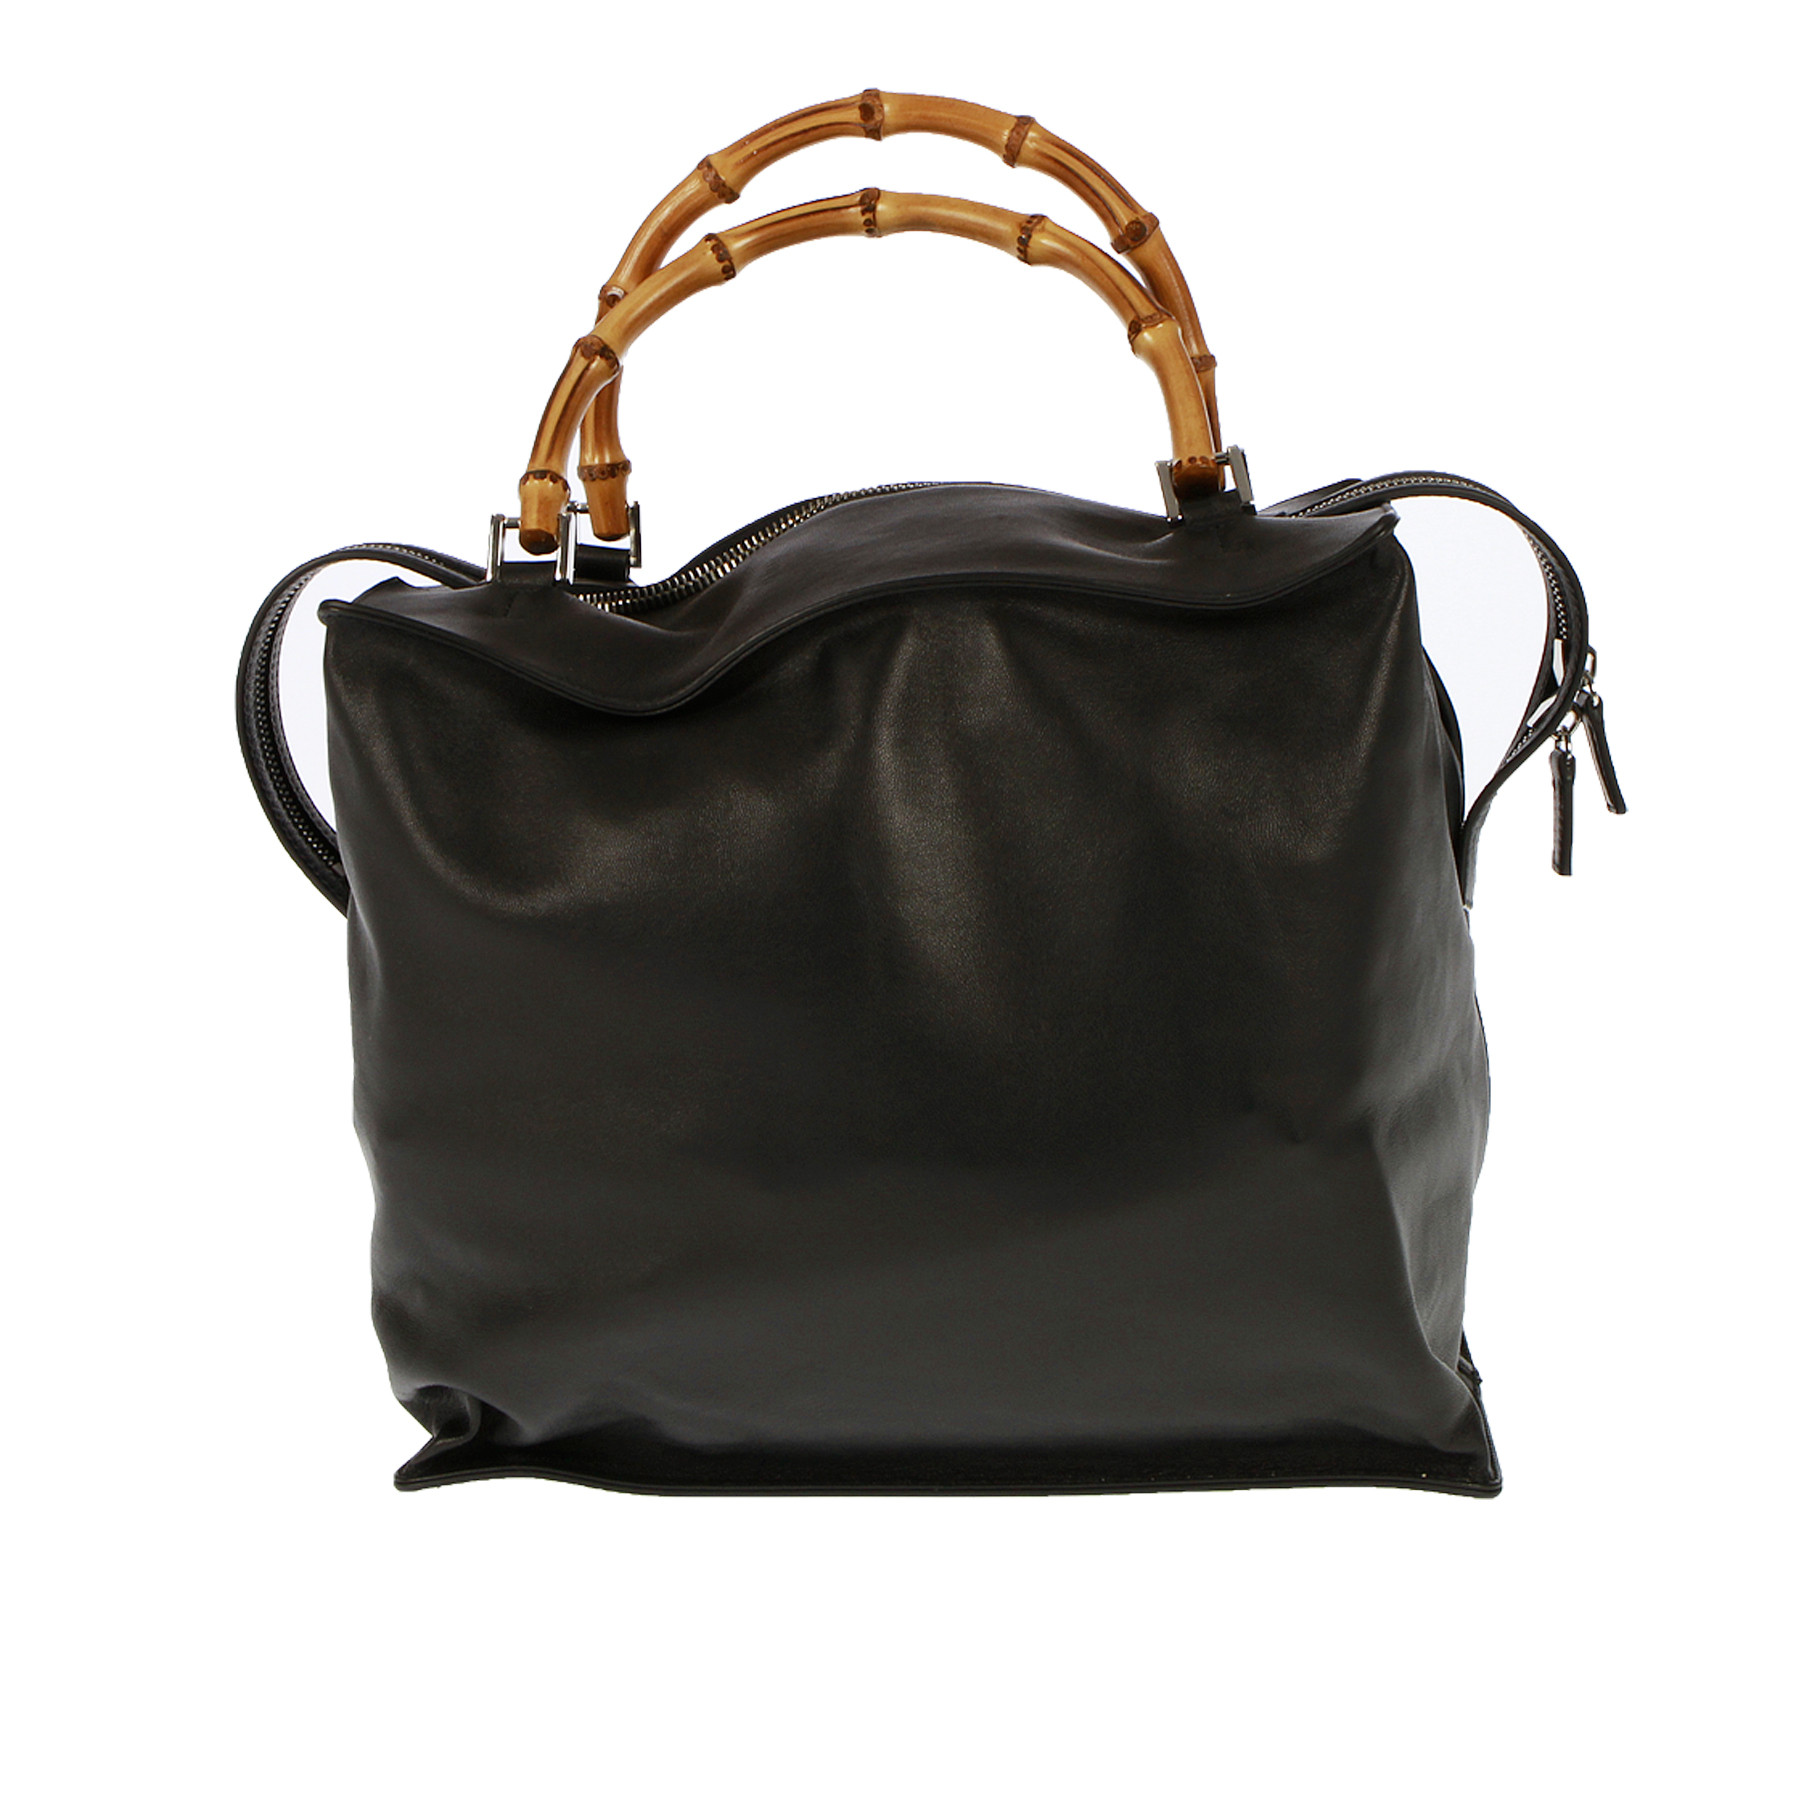 Jil Sander handbag winter season in black leather bamboo handles